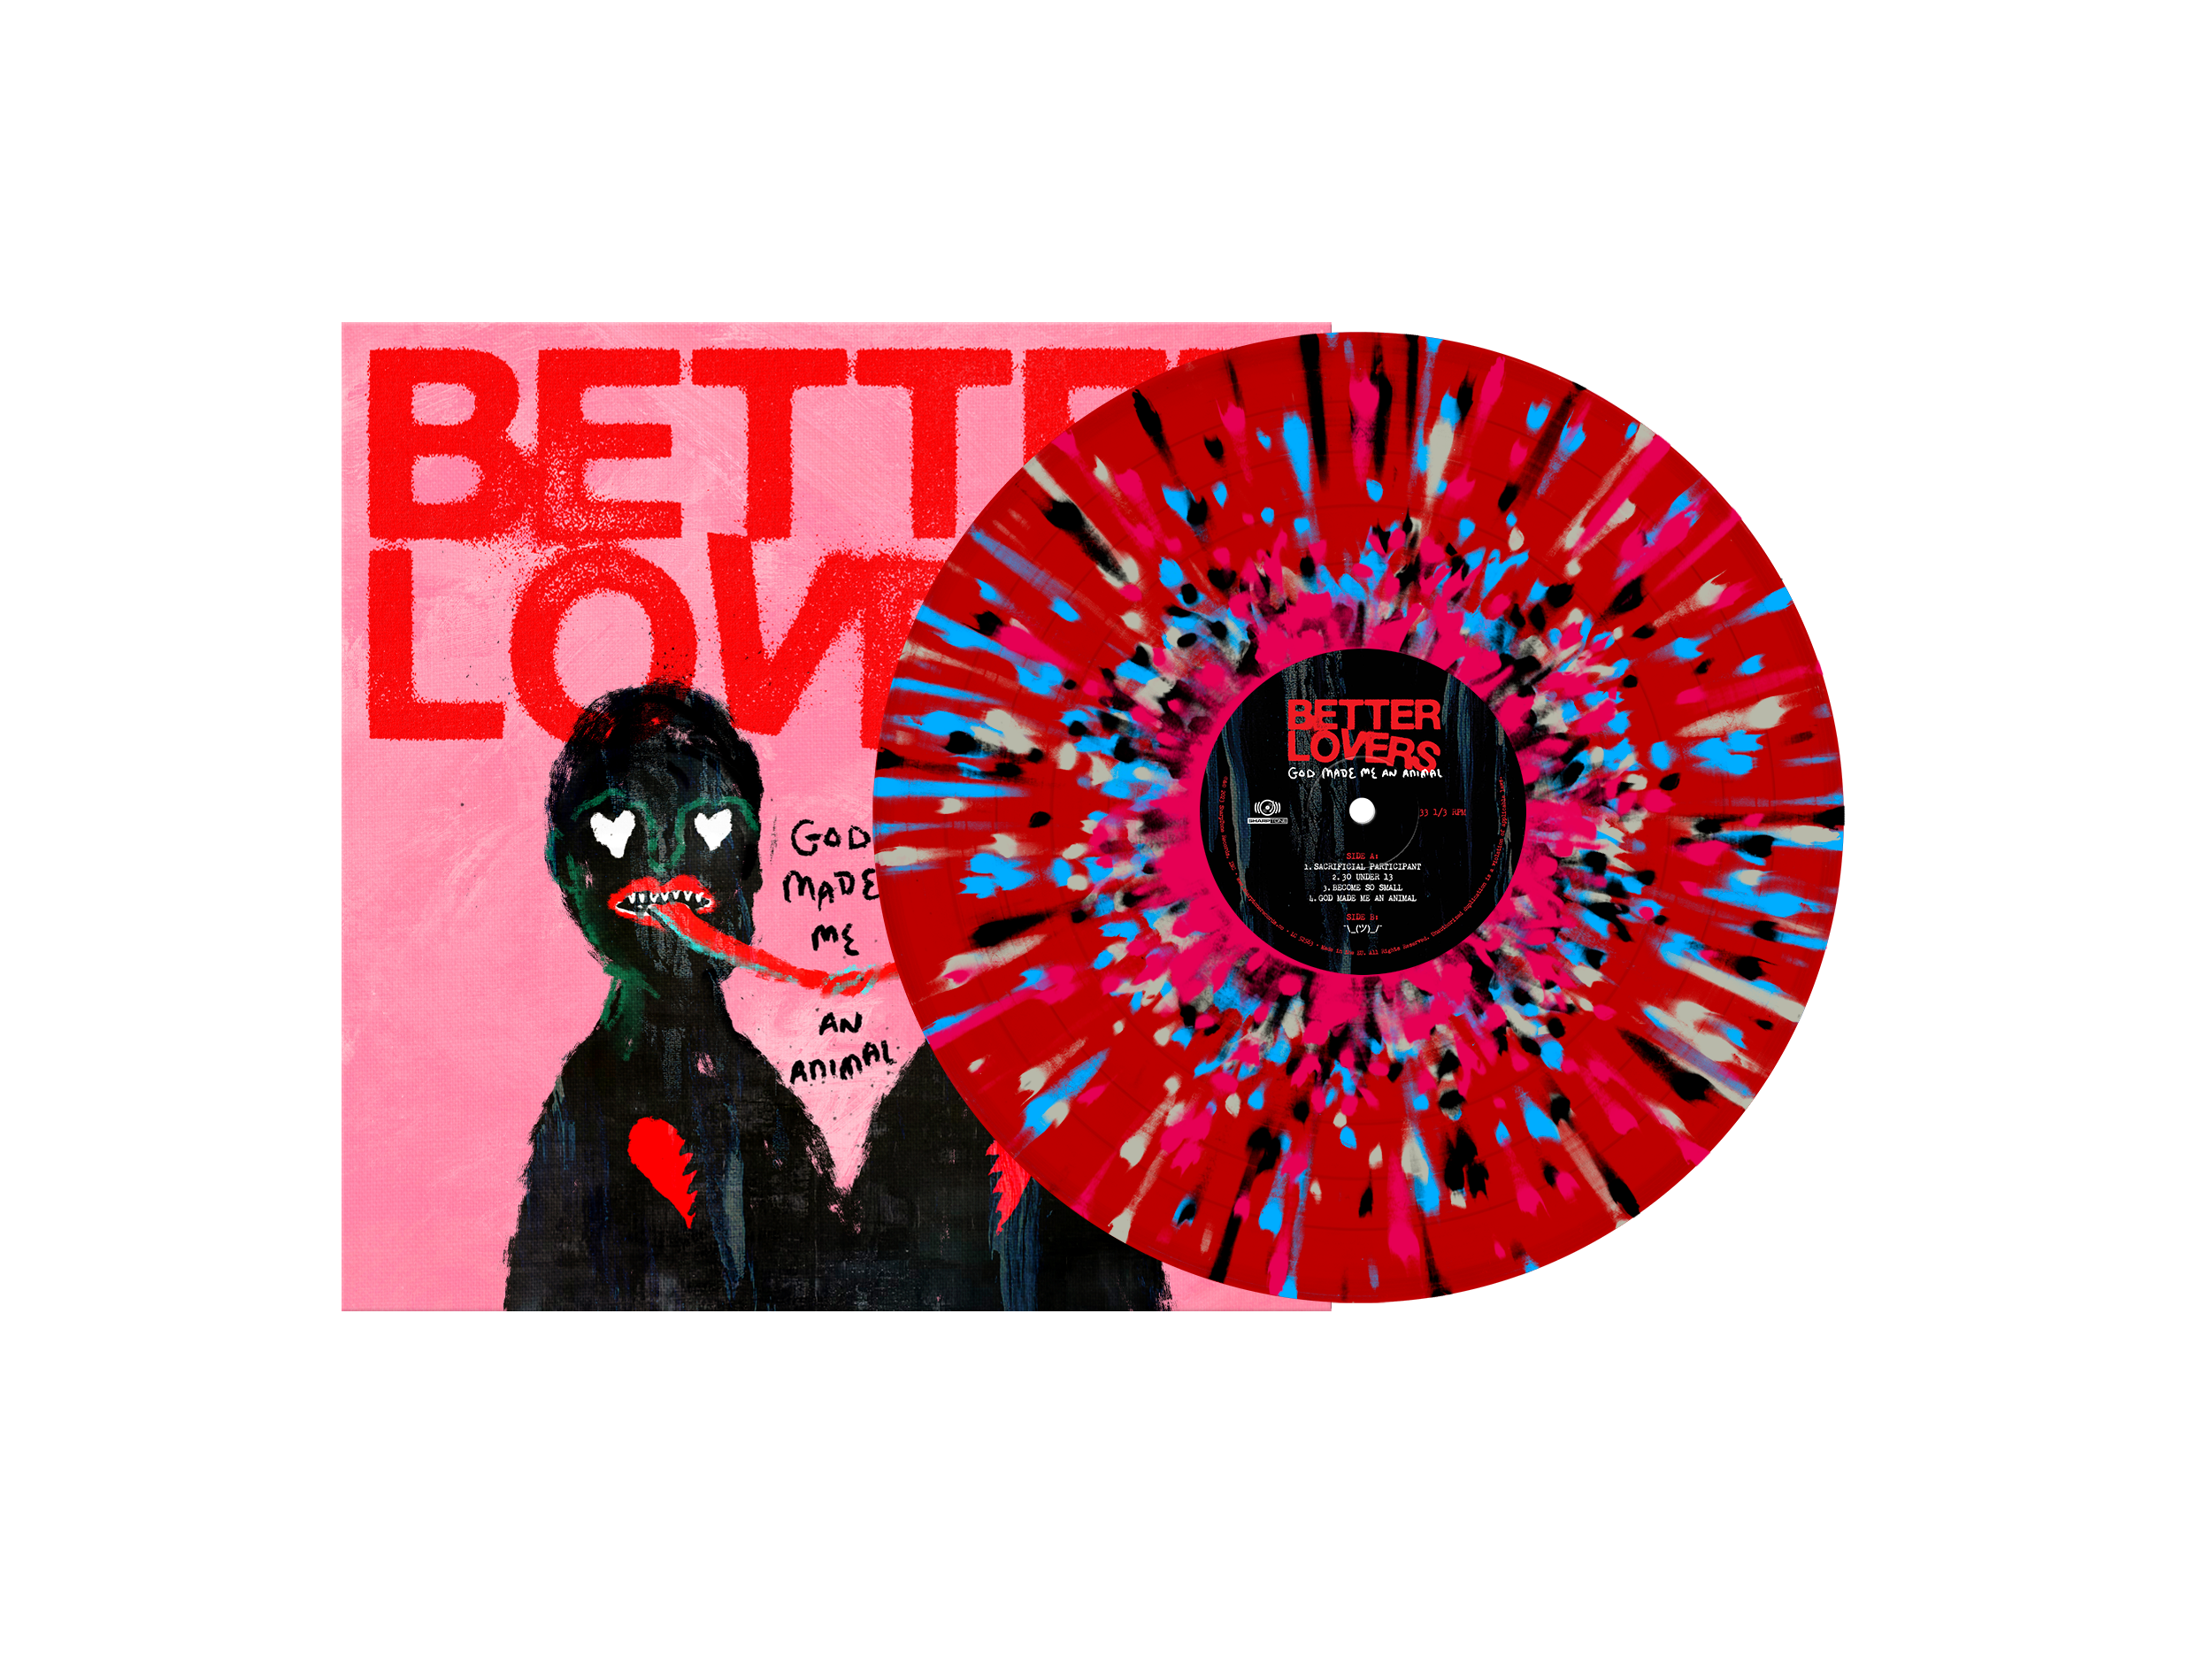 Better Lovers - God Made Me an Animal LP - Red w/ White, Turquoise, Black, Pink Splatter (Pre-Order)